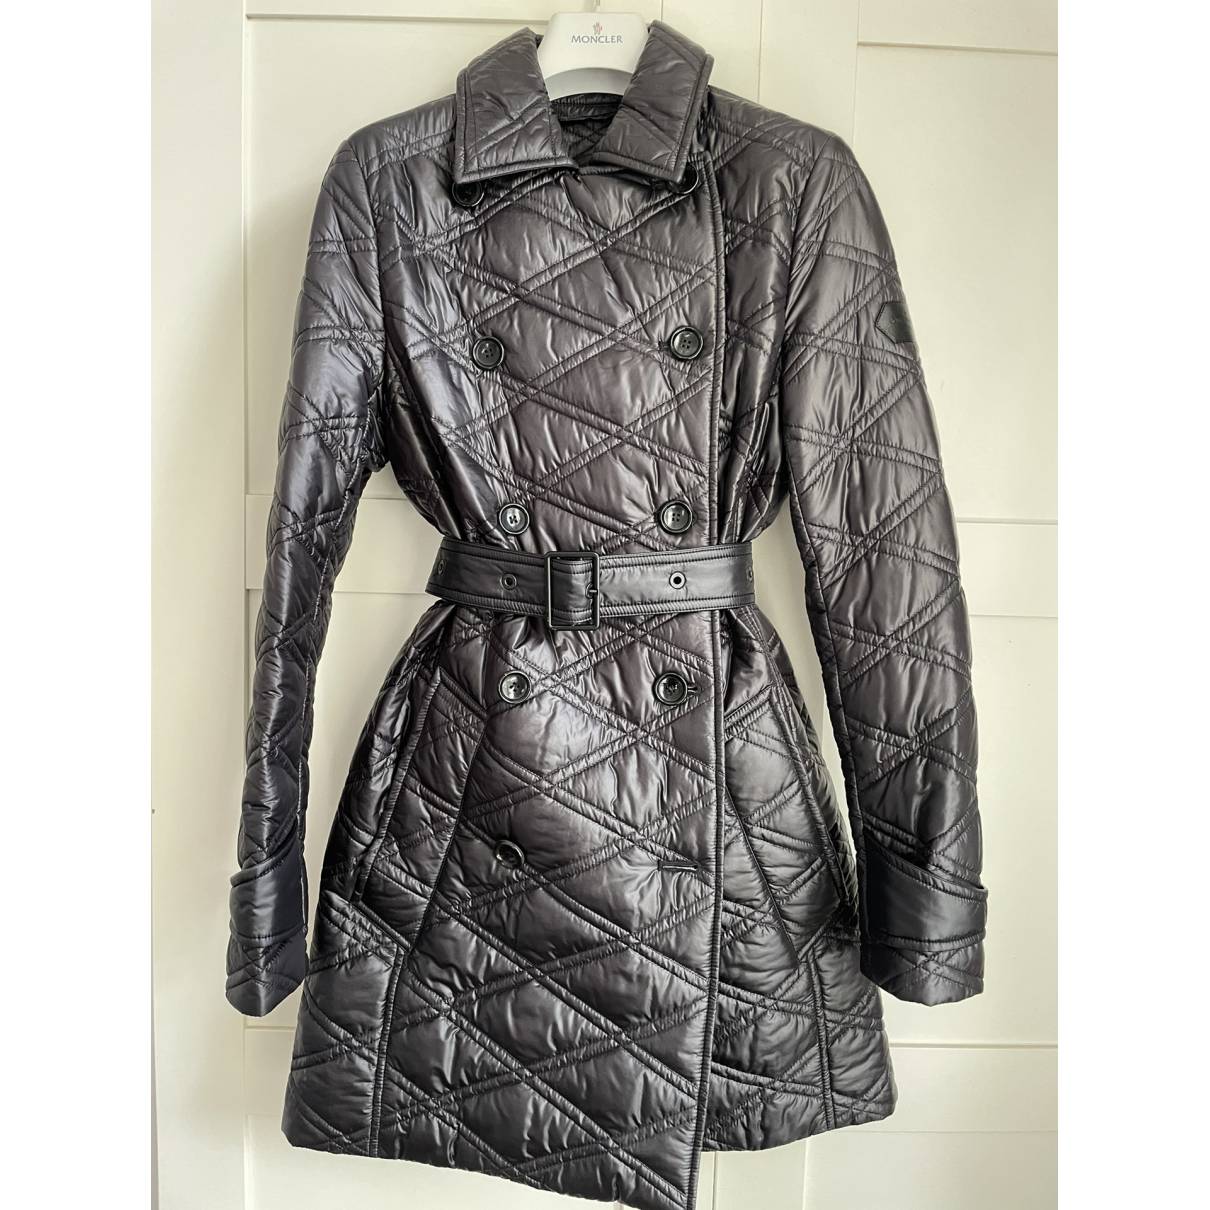 Louis Vuitton Jackets & Coats for Women - Poshmark